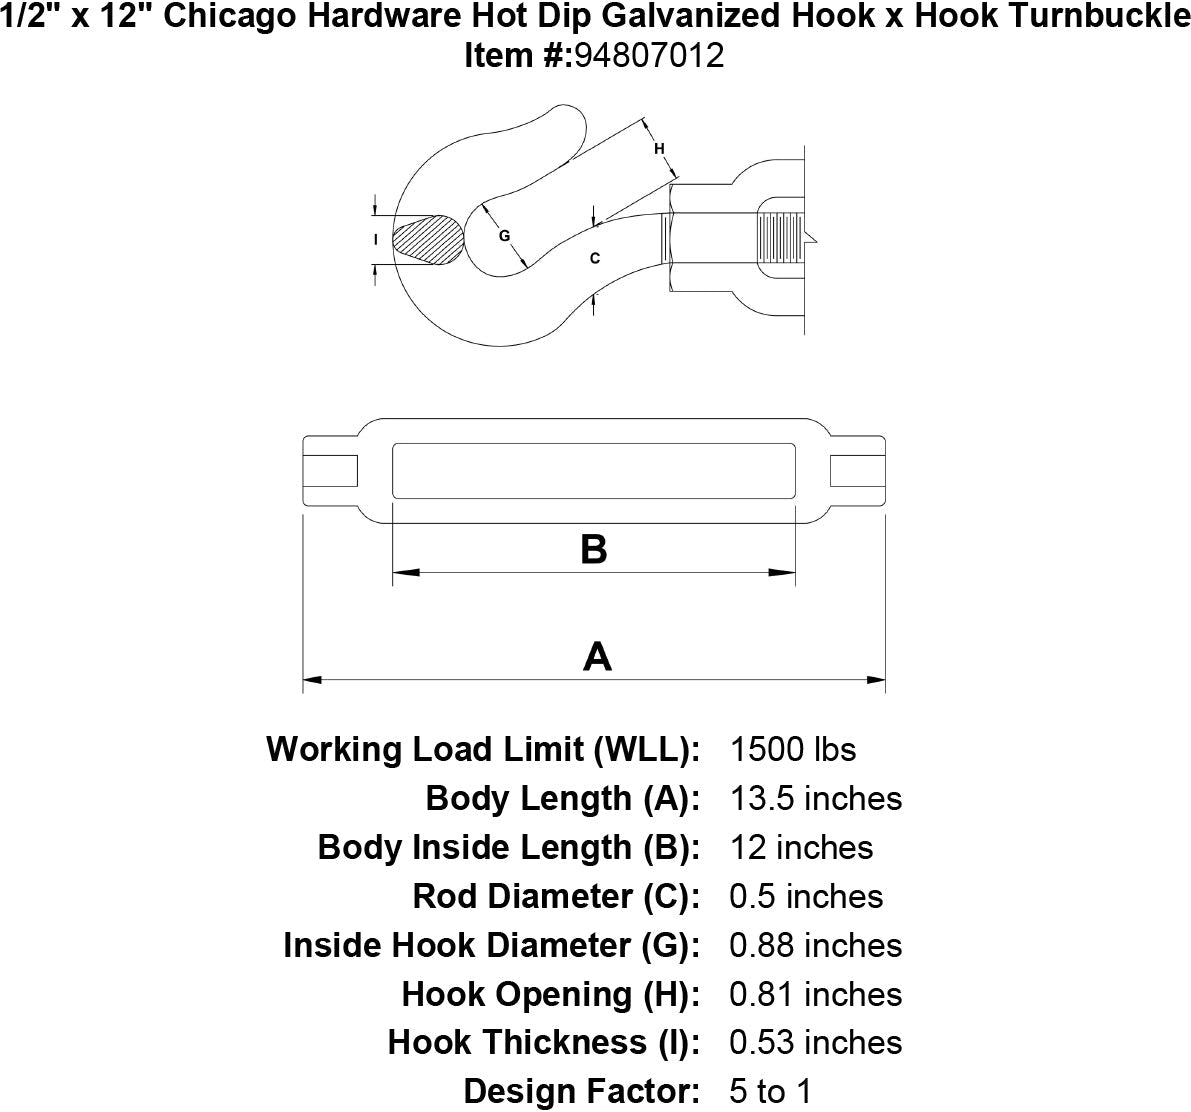 Chicago Hardware Hot Dip Galvanized Hook x Hook Turnbuckles